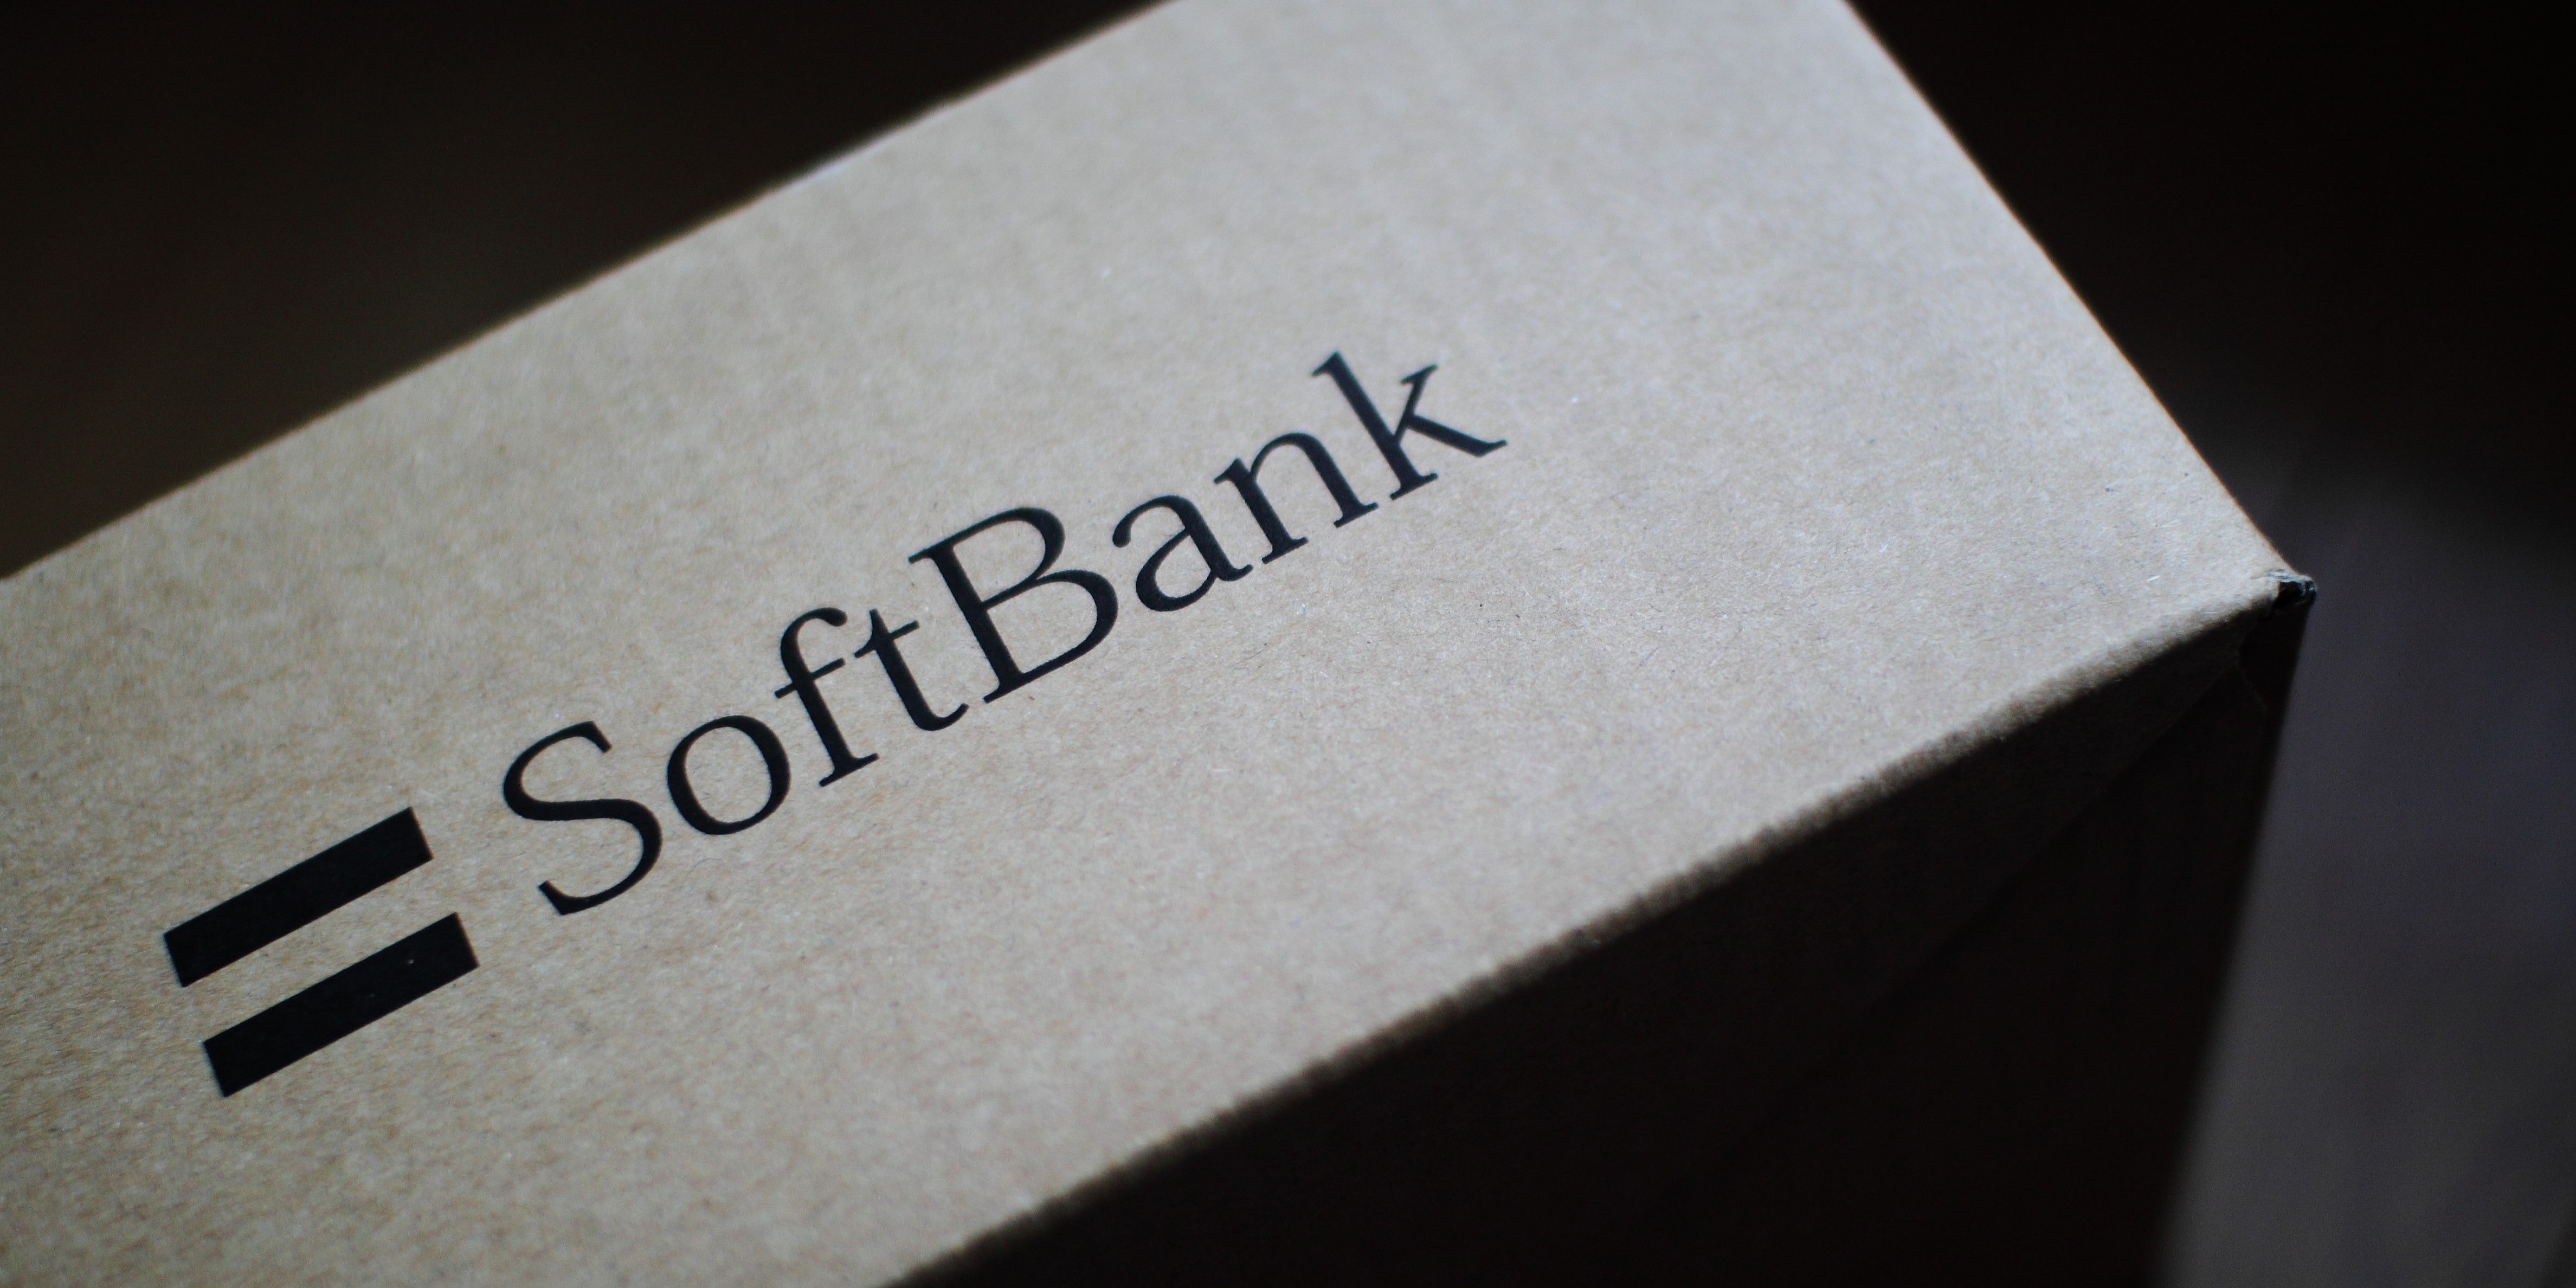 SoftBank ends loss streak after four quarters; posts $6.4B profit in Q3